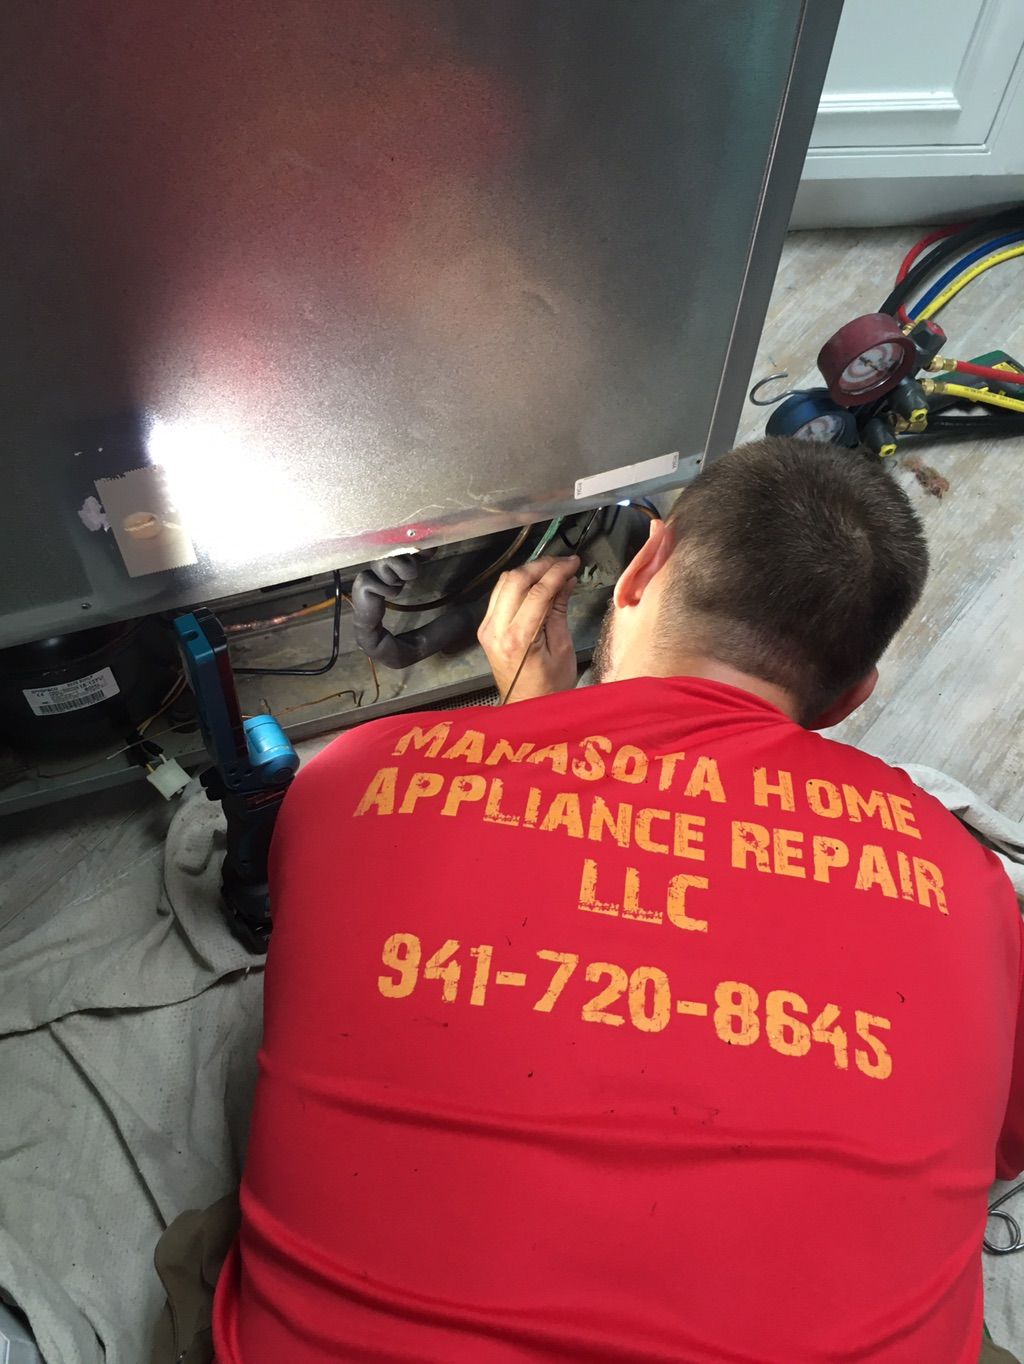 Manasota Home Appliance Repair, LLC